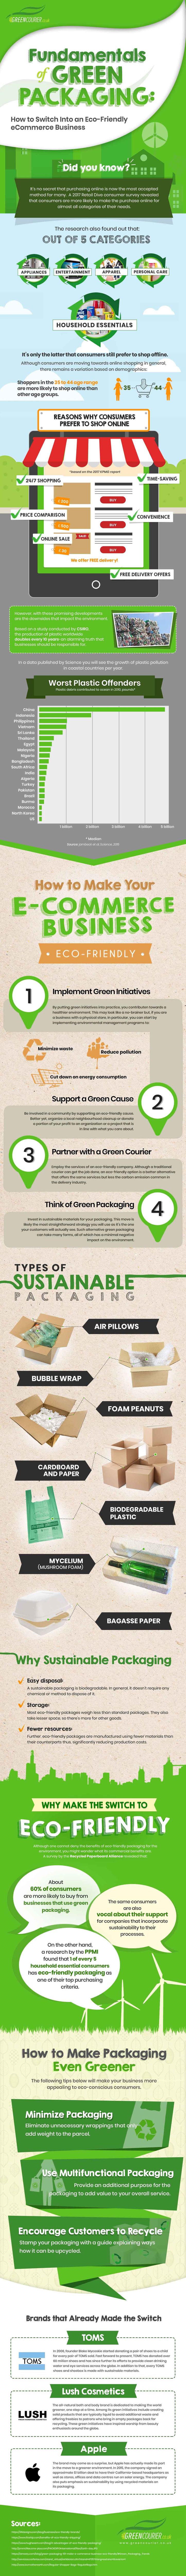 Fundamentals of Green Packaging